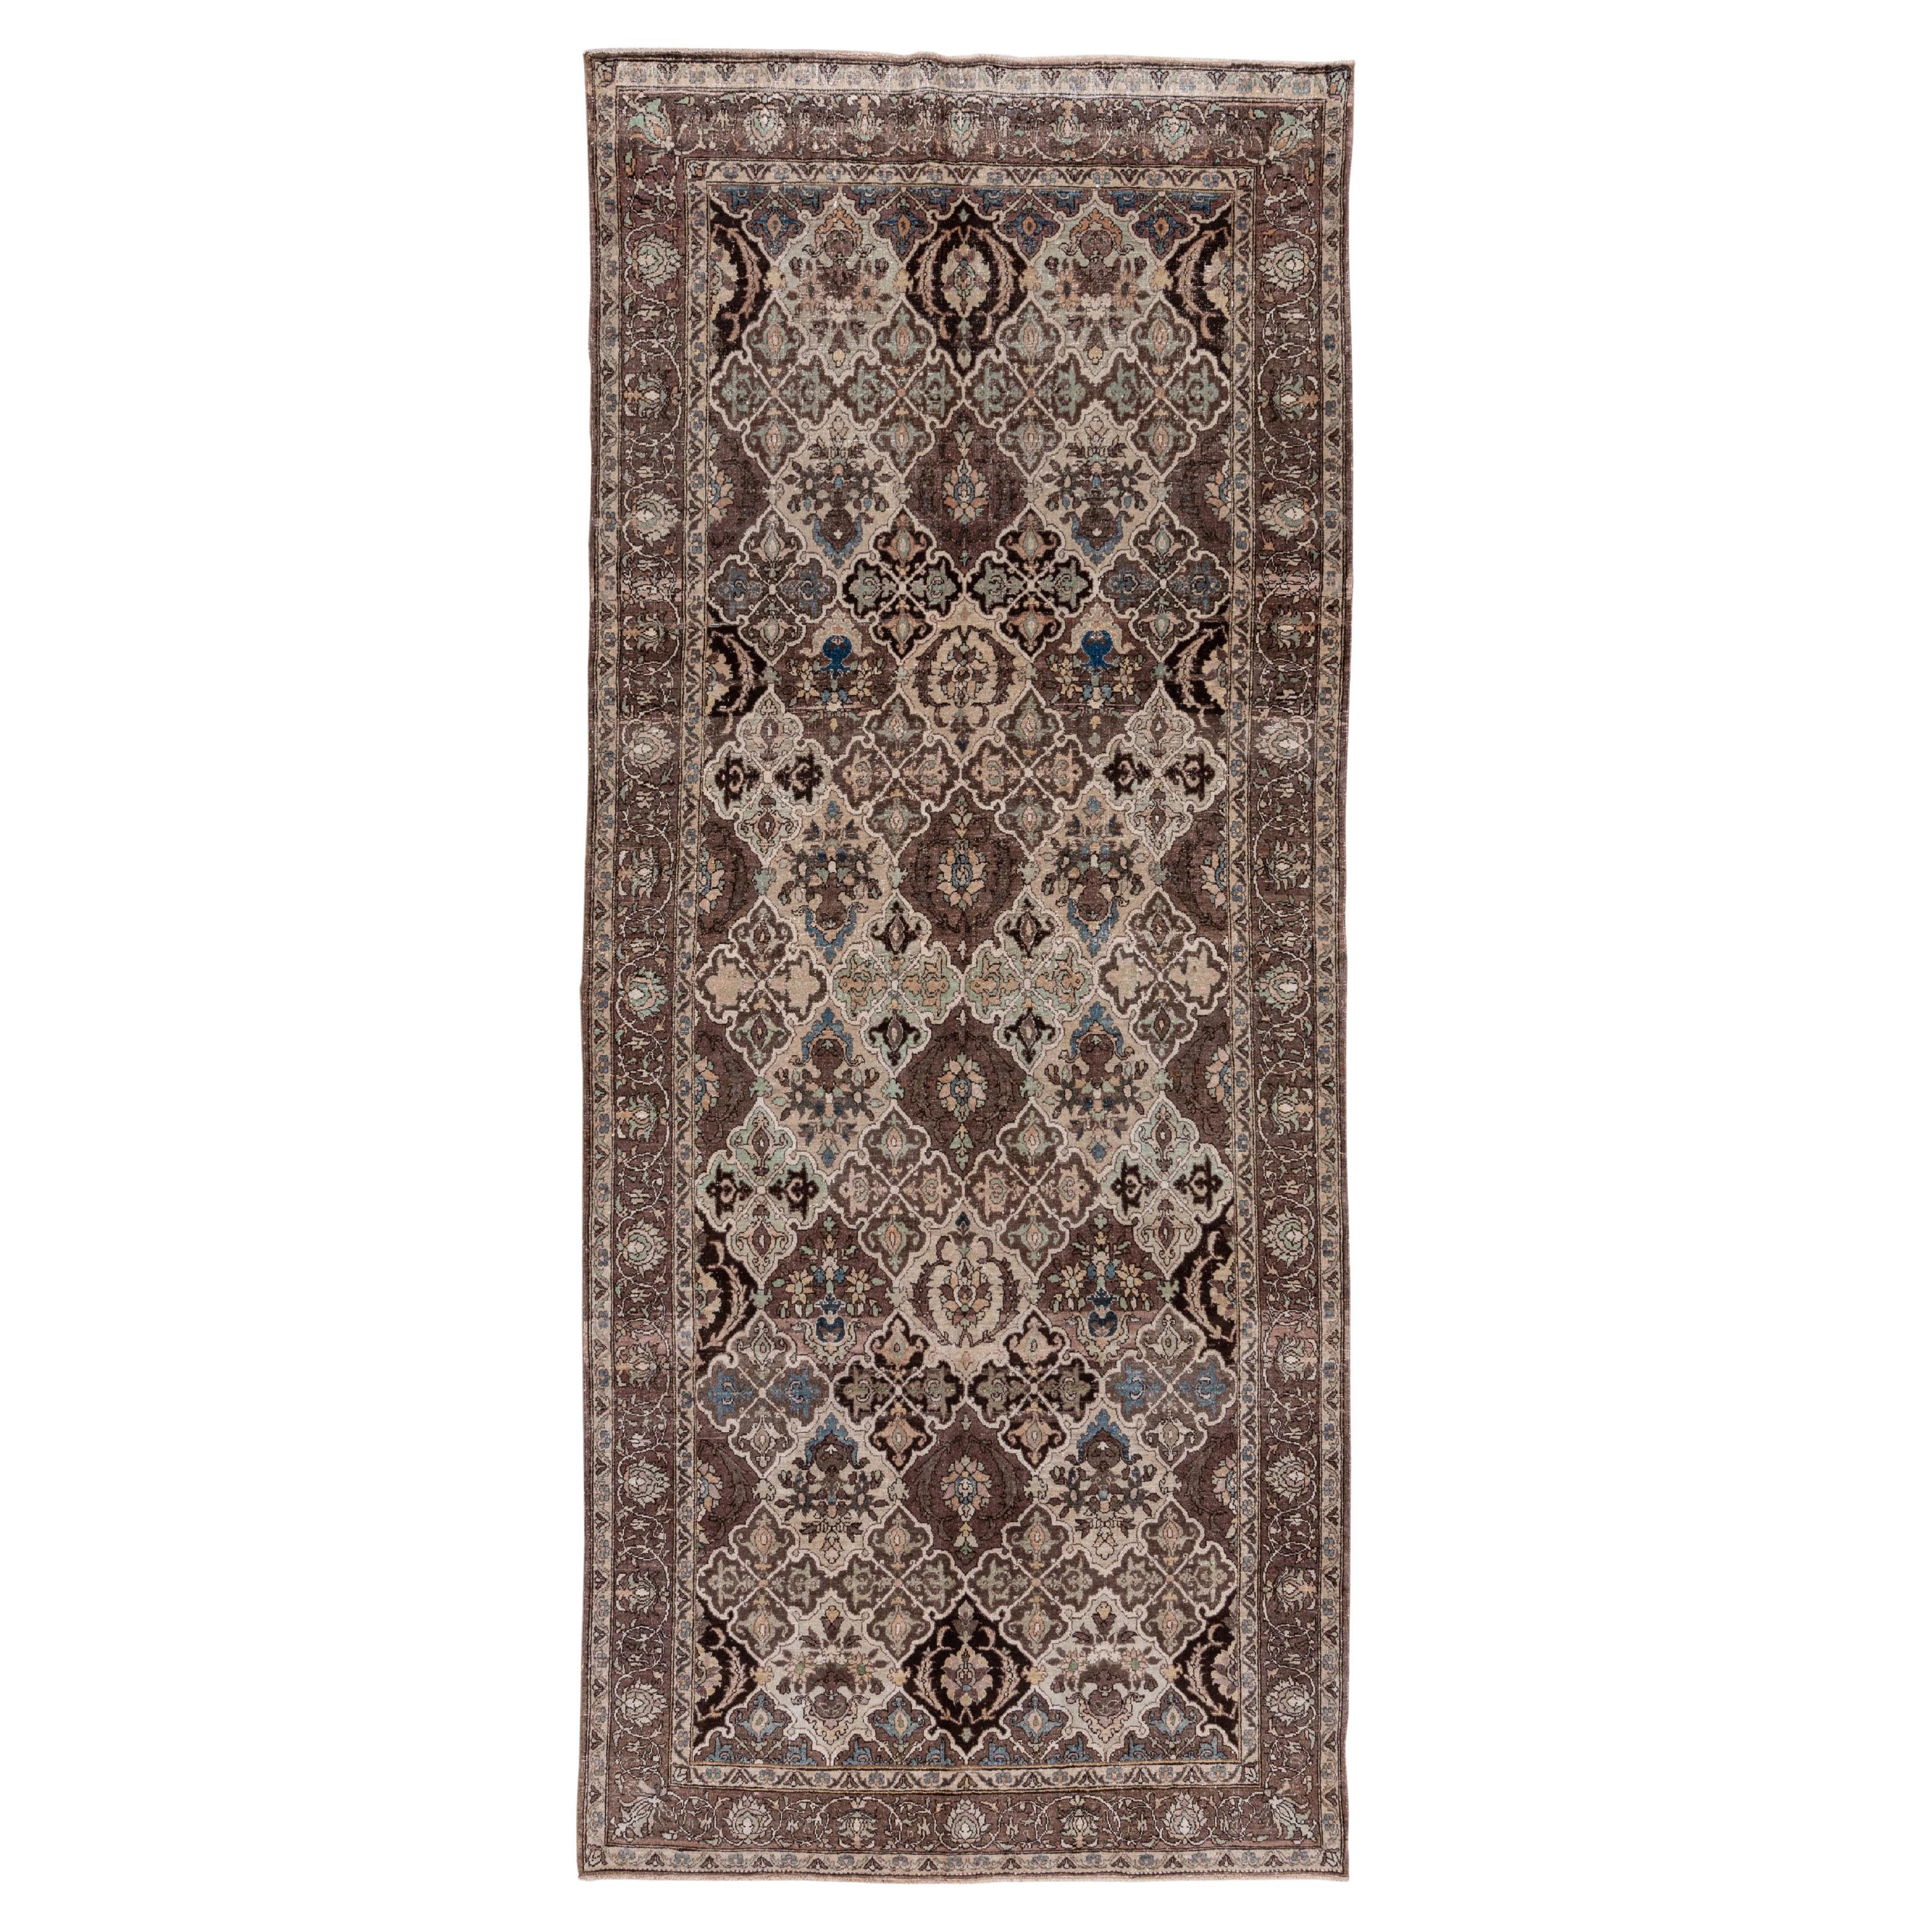 Fine Antique Persian Tabriz Kellegi Rug, Brown Palette, Seafoam & Blue Accents For Sale